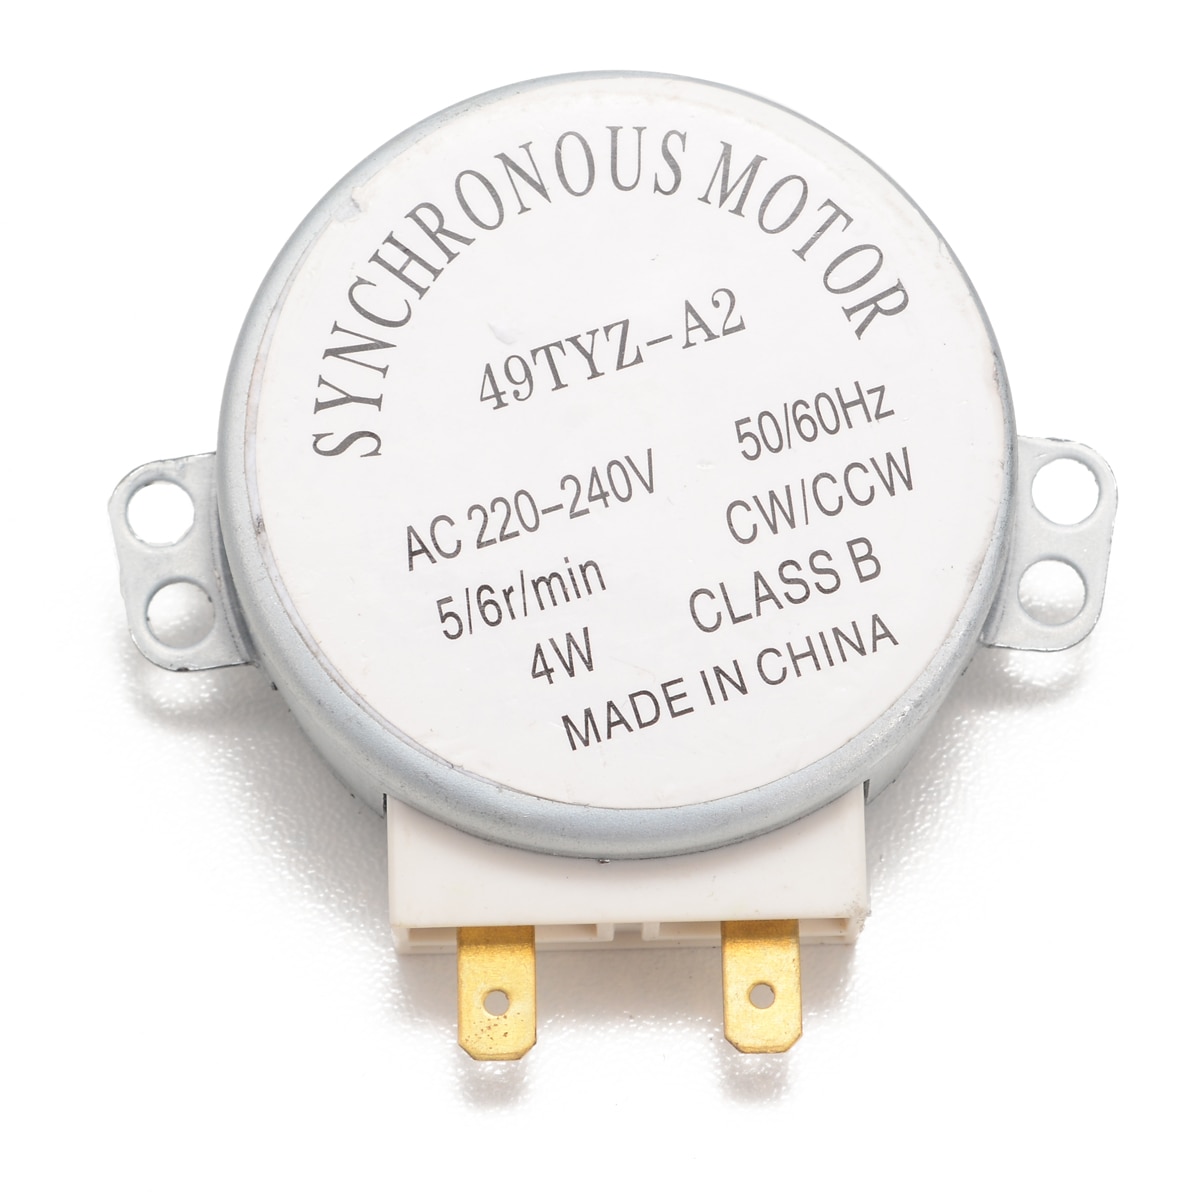 Magnetron Synchrone Motor 49TYZ-A2 AC 220-240V CW/CCW 4W 4 RPM Synchrone Motor met 2 Pins Terminals